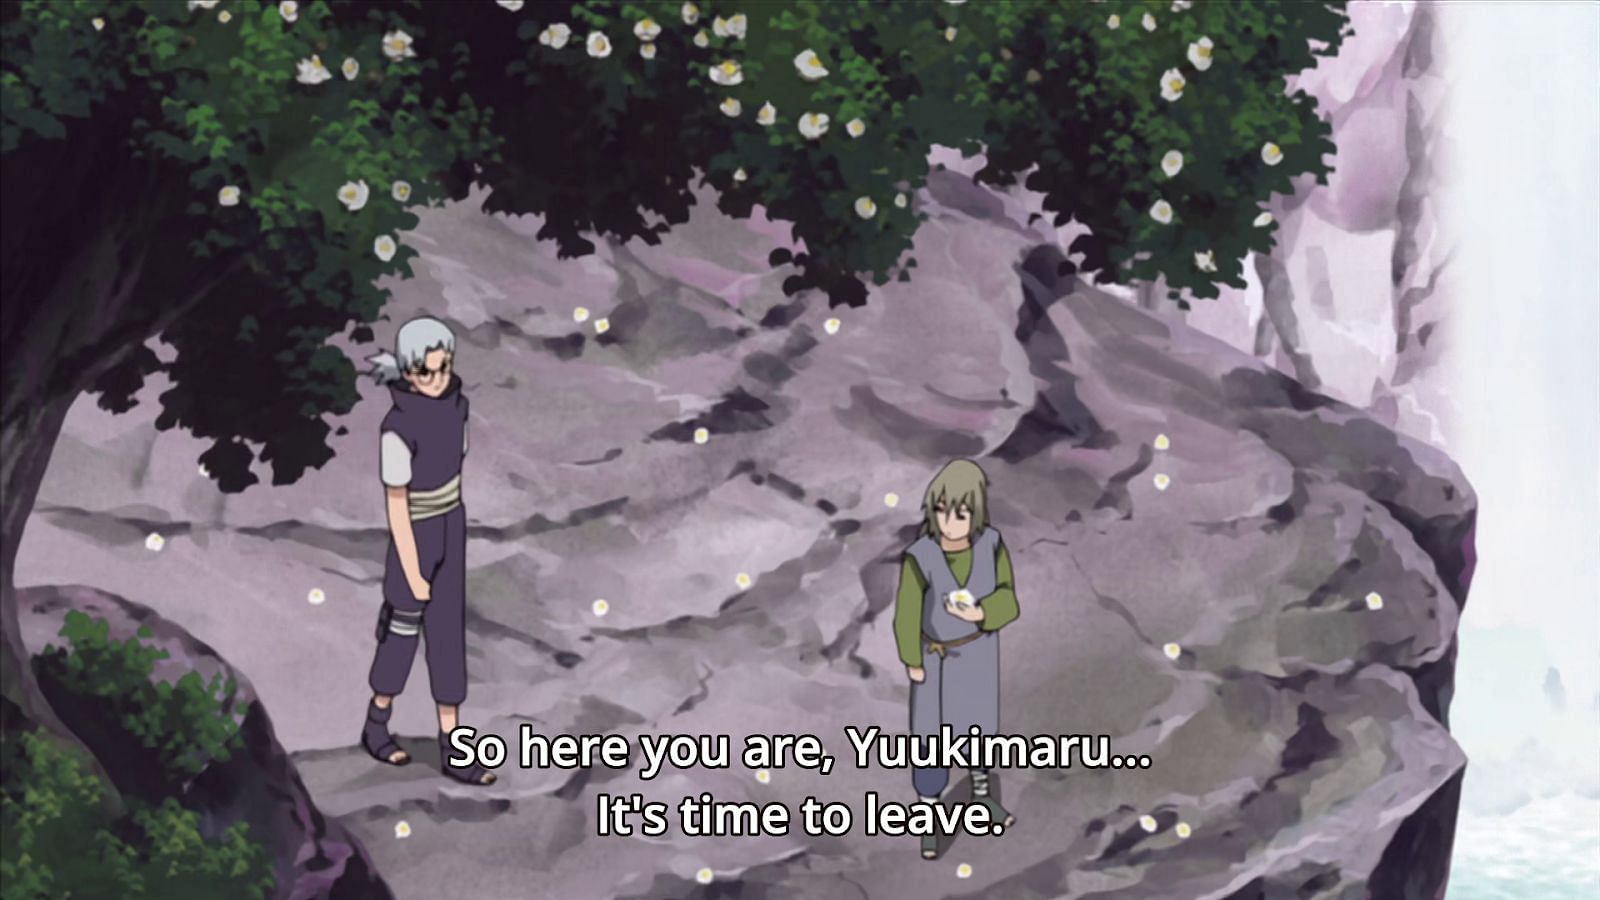 What happened to Yukimaru after Guren died? - Quora